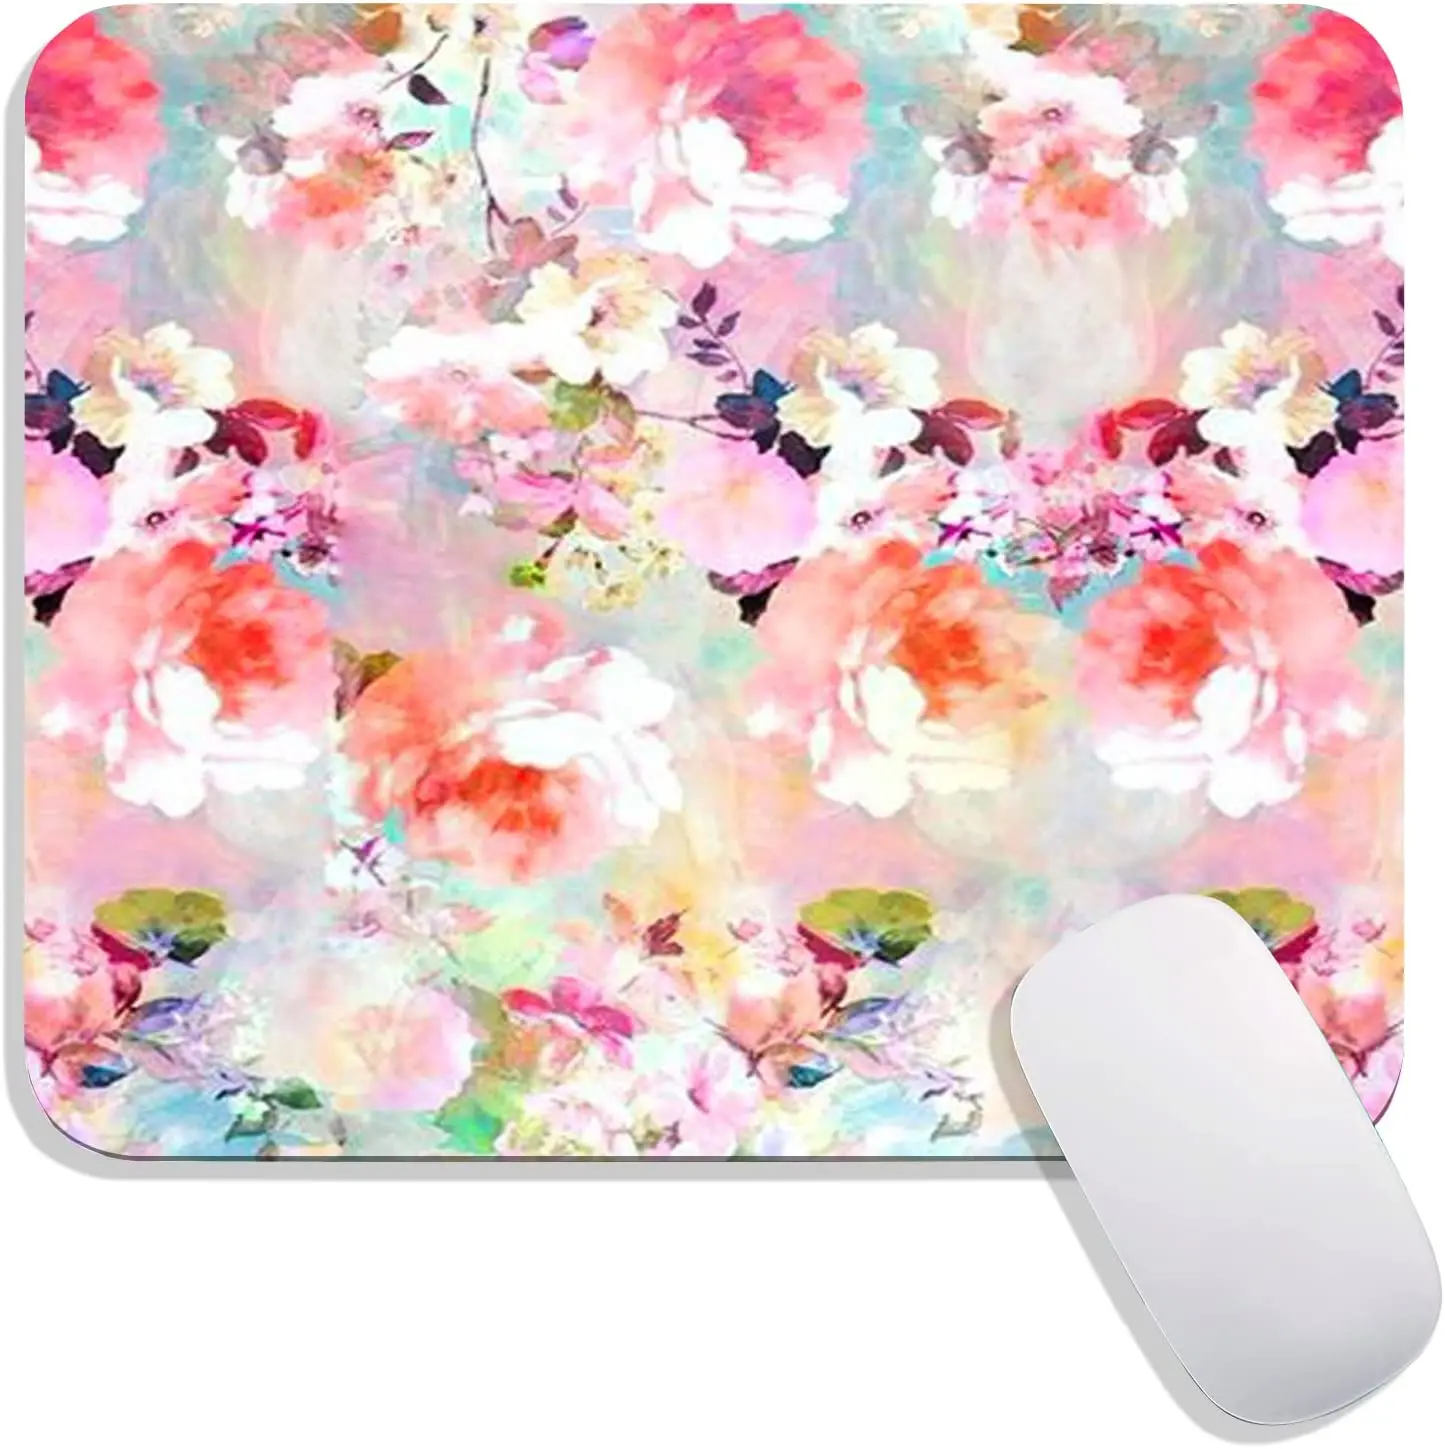 

Floral Flower Mouse Pad Pretty Personalized Premium-Textured Mousepads Design Non-Slip Rubber Base Computer Mouse Pads